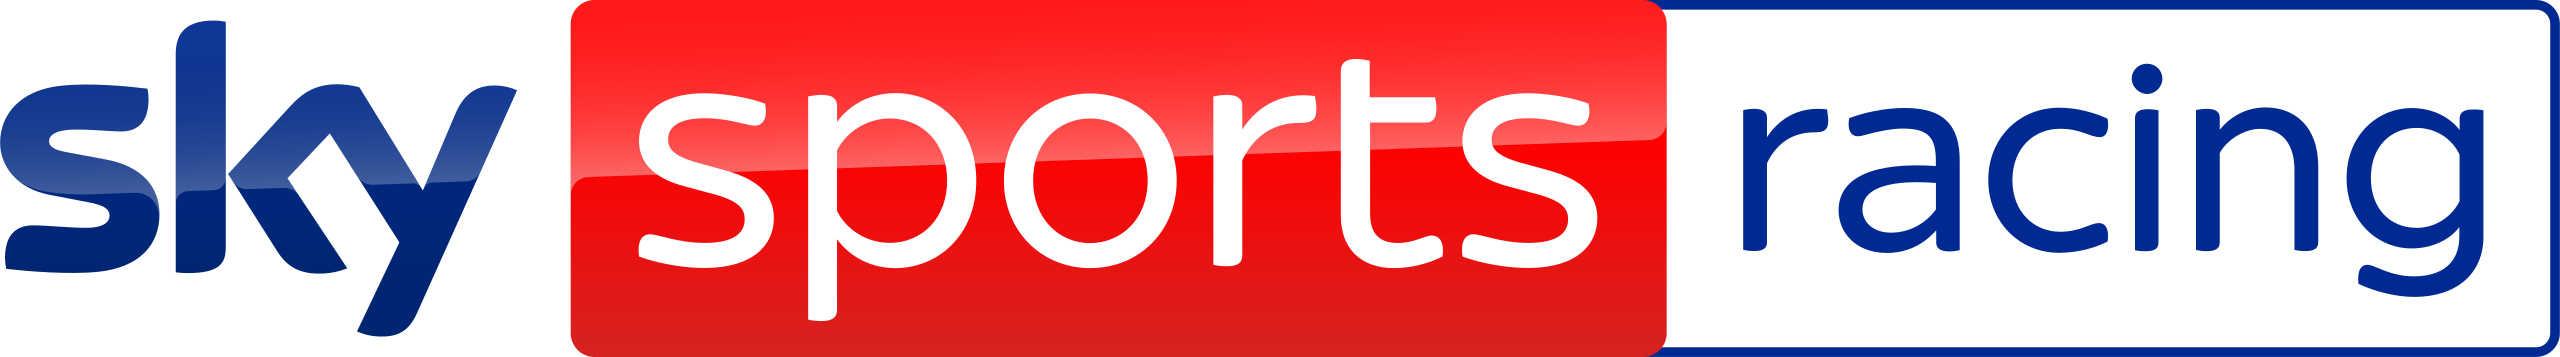 Sky_Sports_Racing_logo_2020.svg